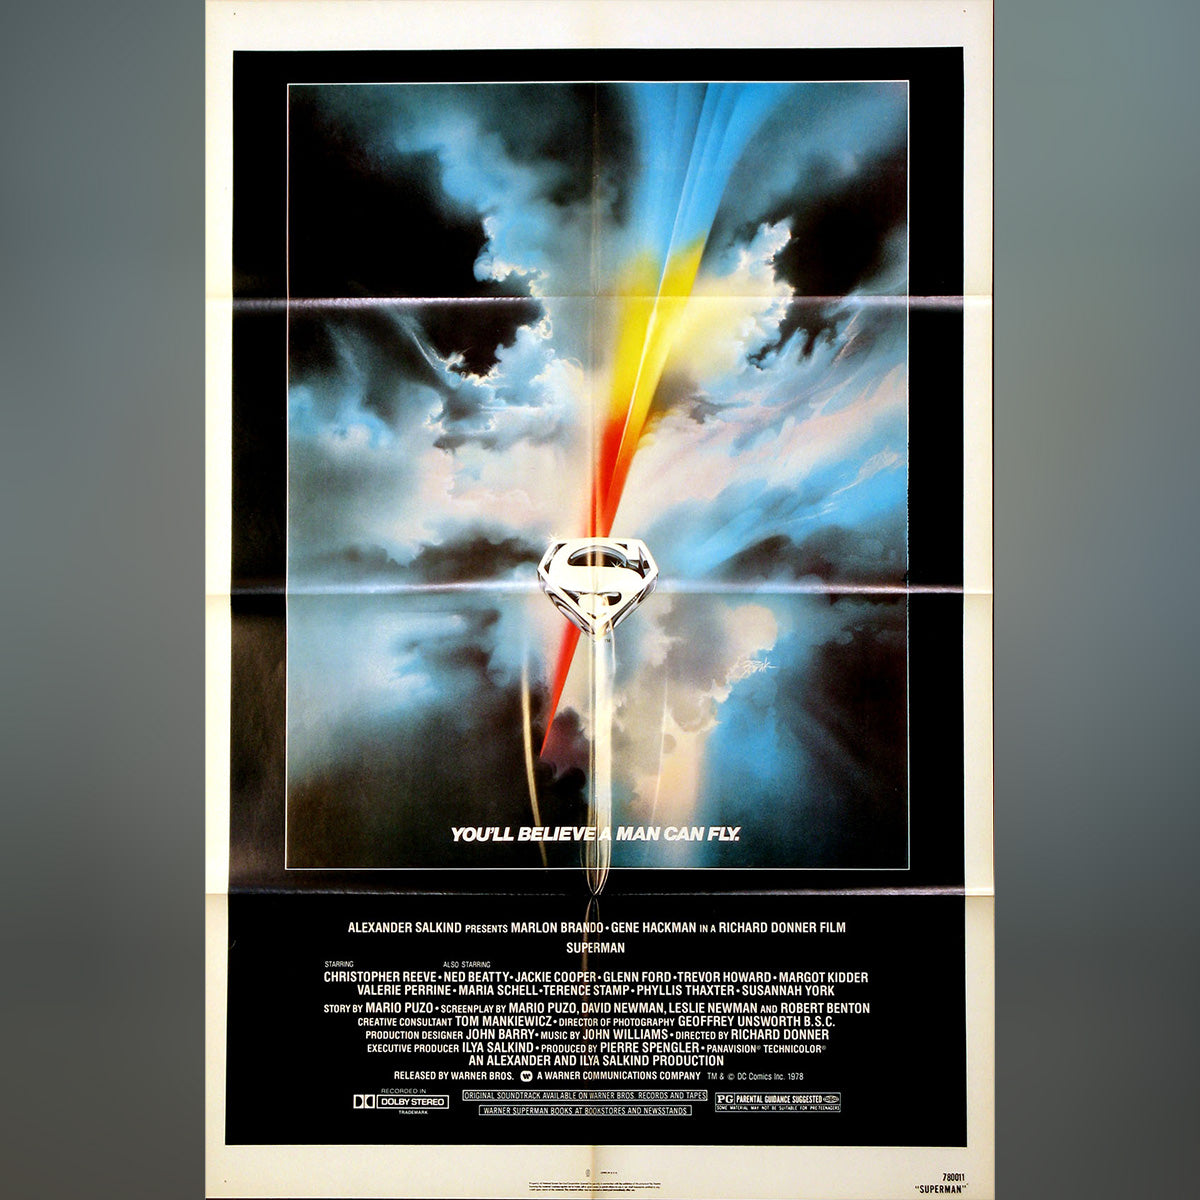 Original Movie Poster of Superman (1978)